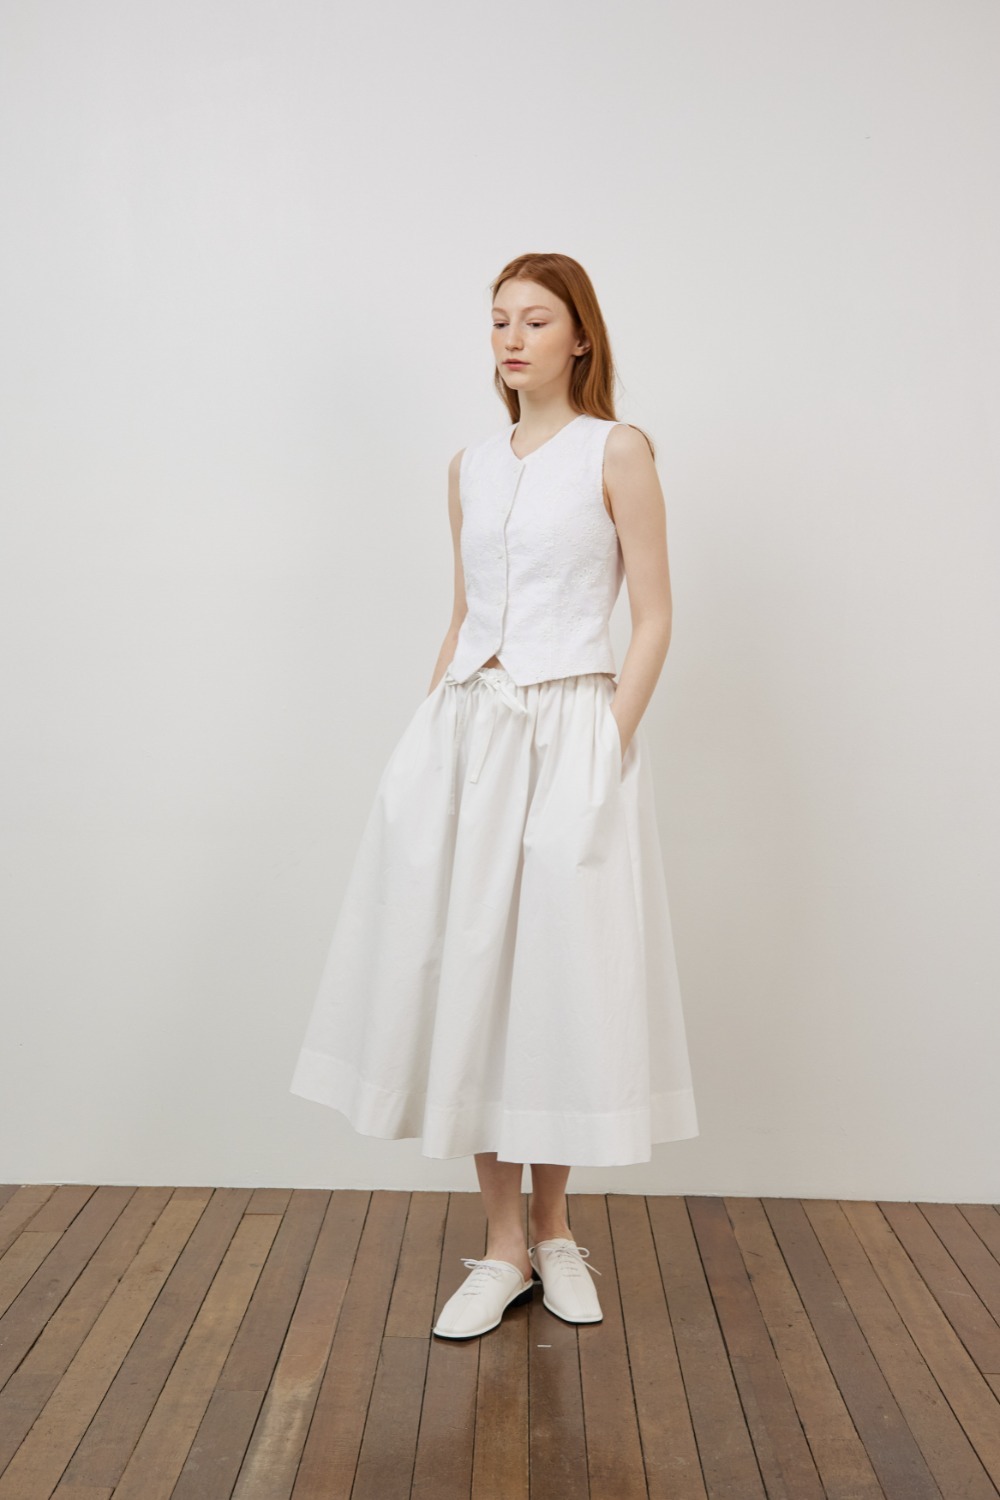 Cotton volume skirt in white [2차 재입고 완료]